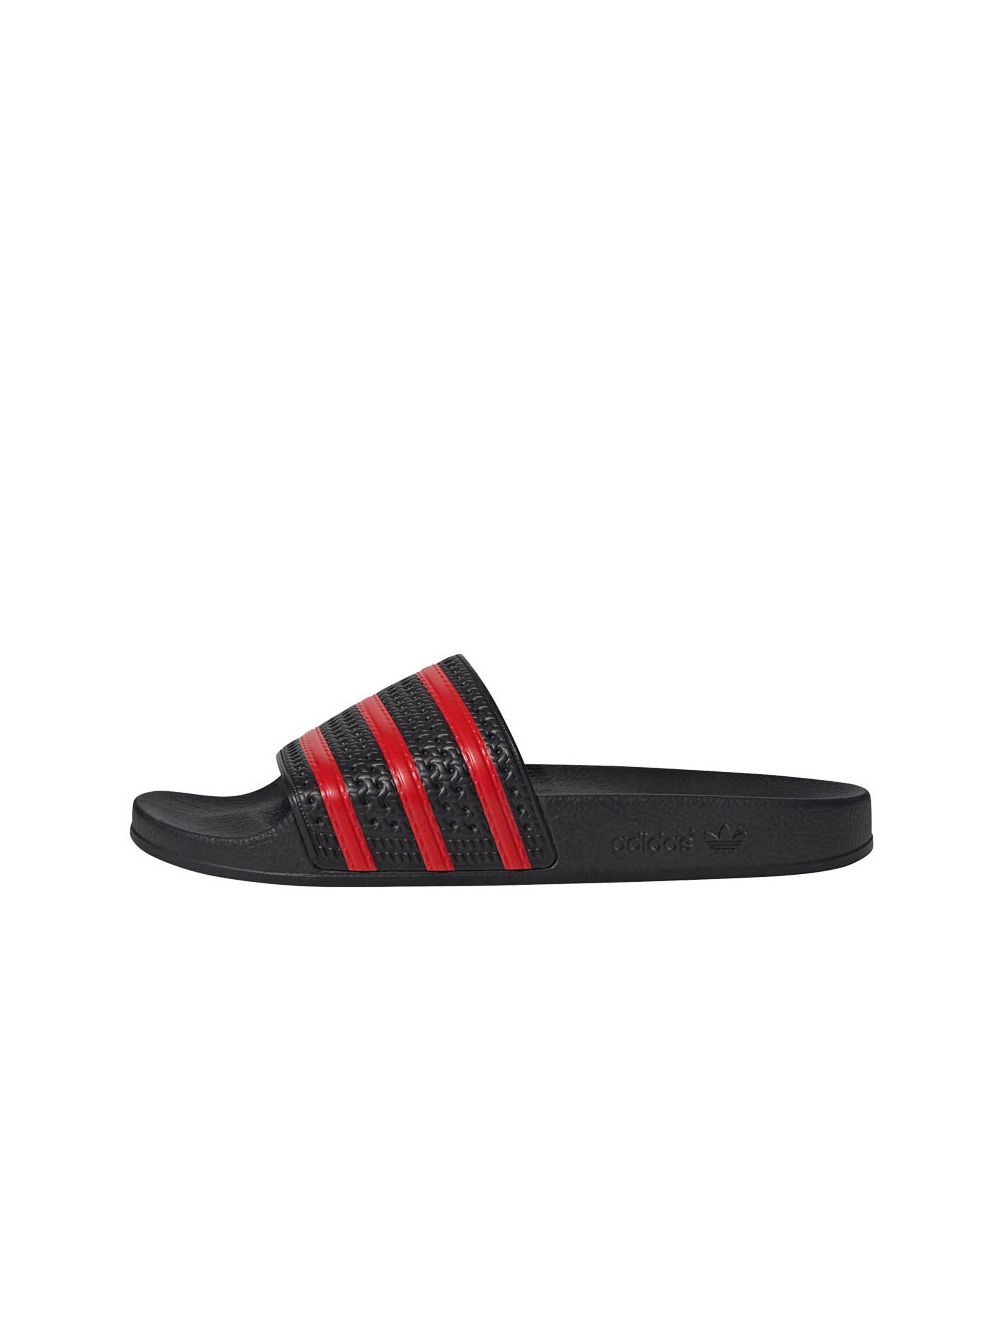 Buy adidas Originals Adilette Sandal Mens Red Black | Studio 88